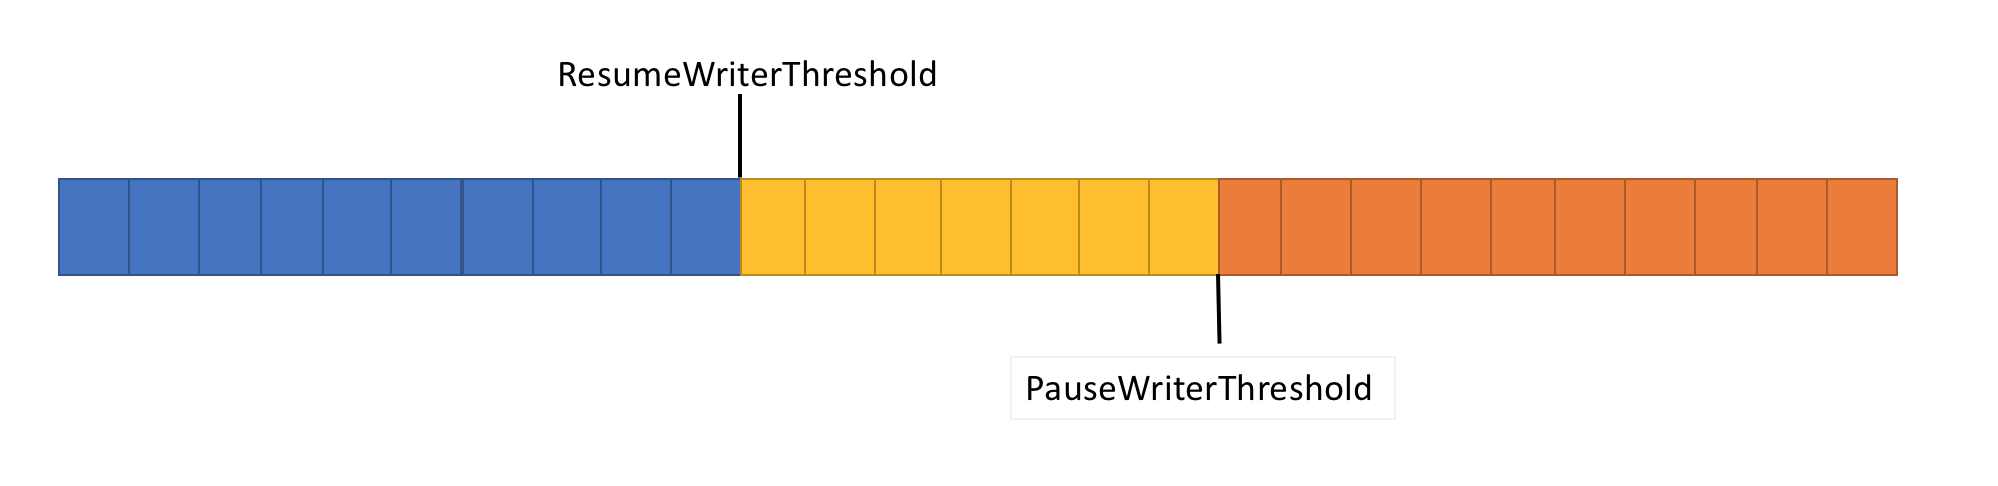 ResumeWriterThreshold と PauseWriterThreshold を含む図